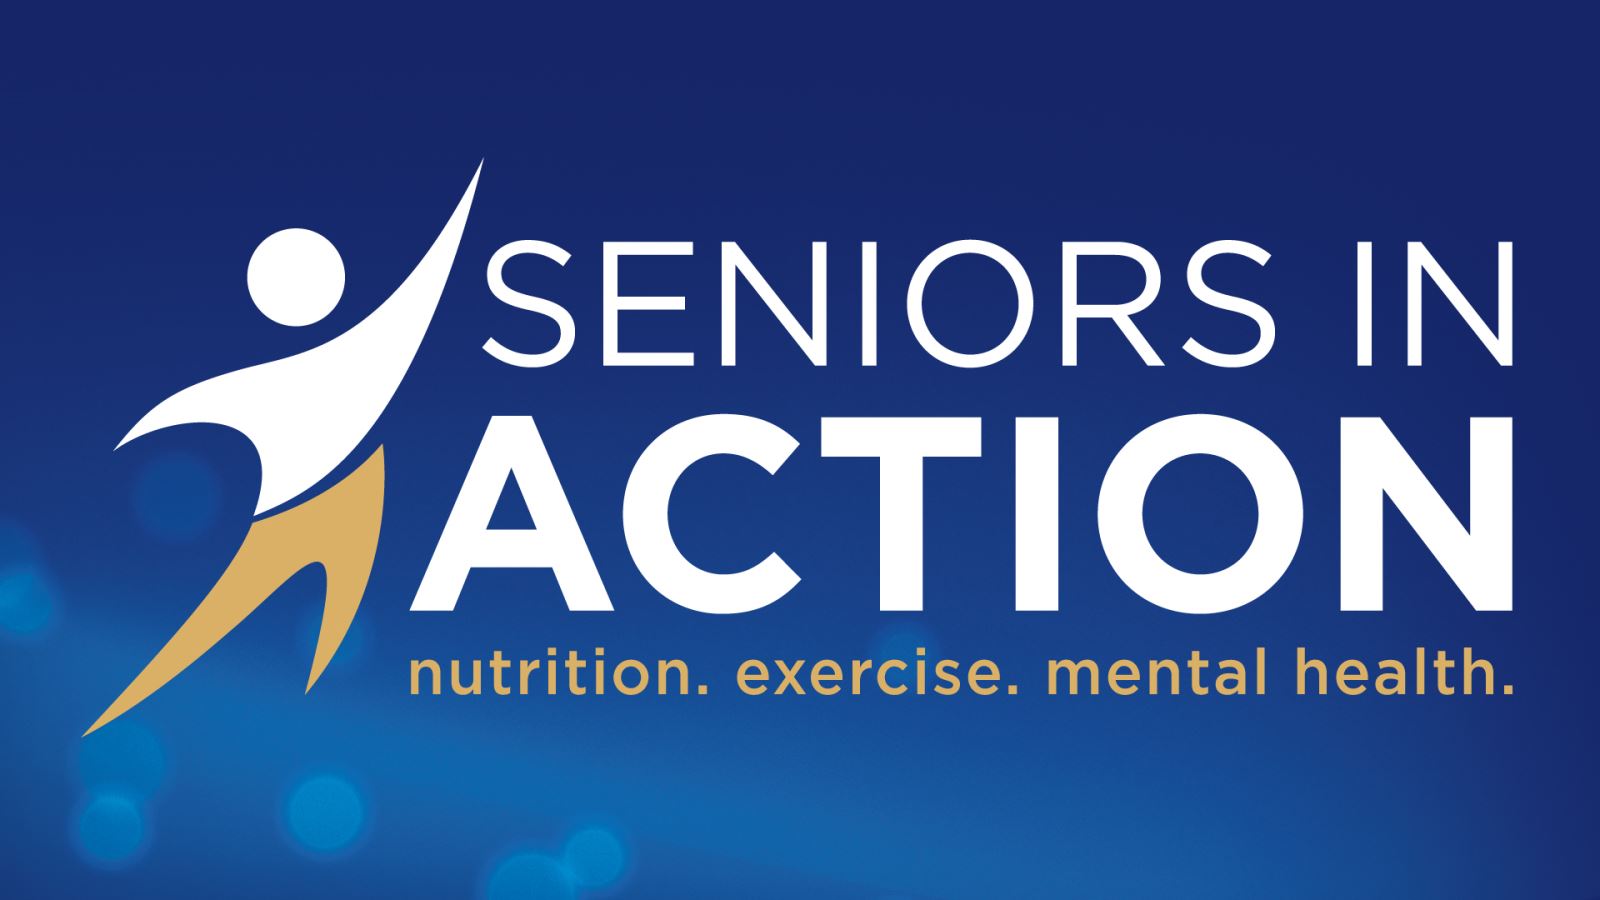 Seniors in action graphic